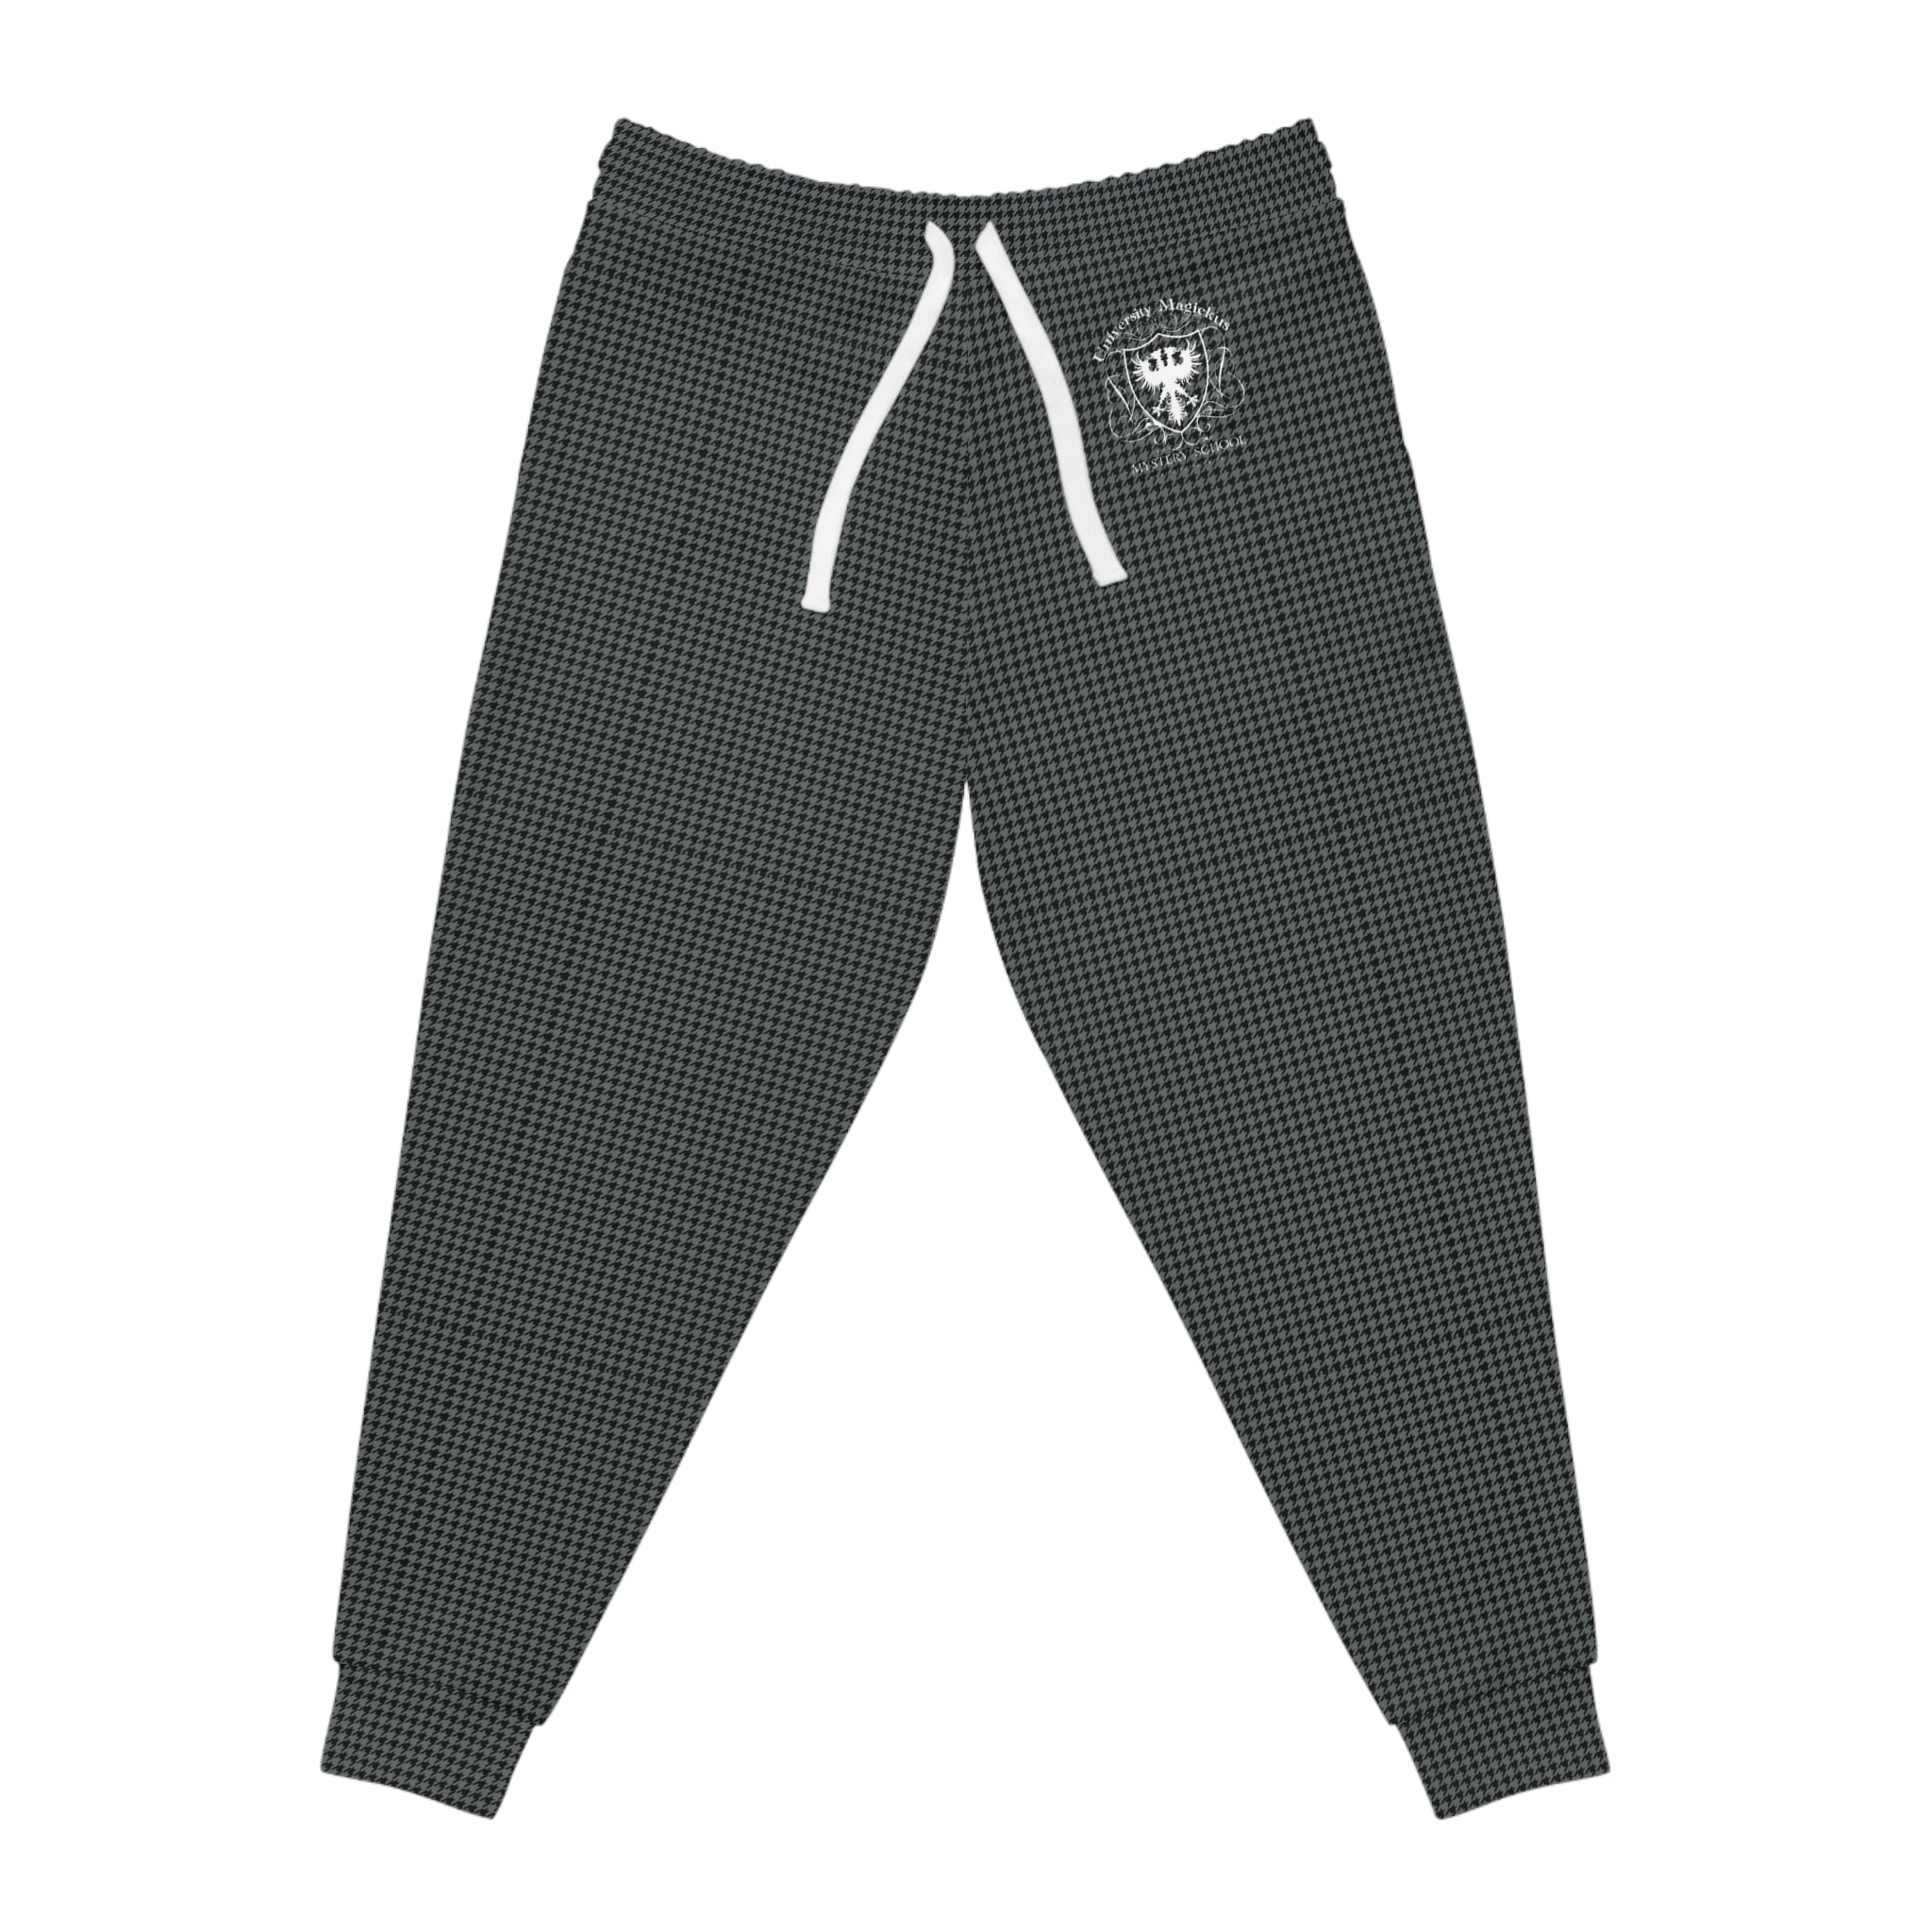 University Magickus School Emblem Athletic Joggers  in Carbon/Black